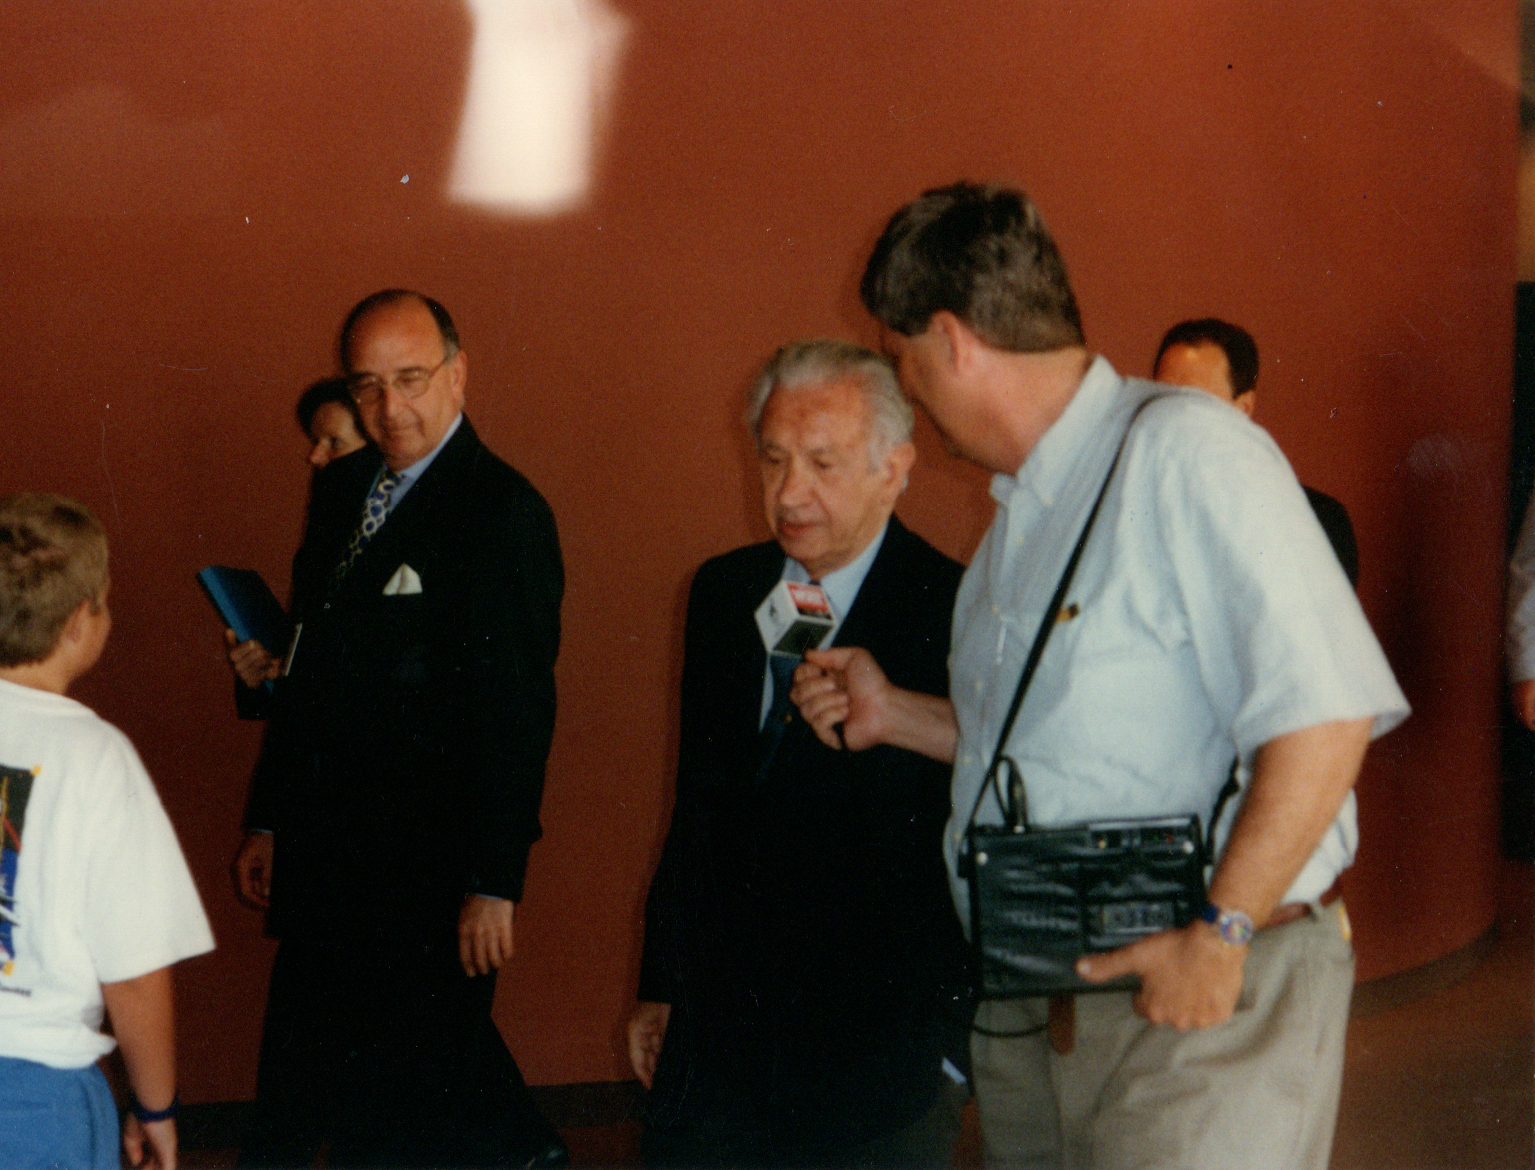 Ed Hula interviews Juan Antonio Samaranch in 1996. (Sheila S. Hula)